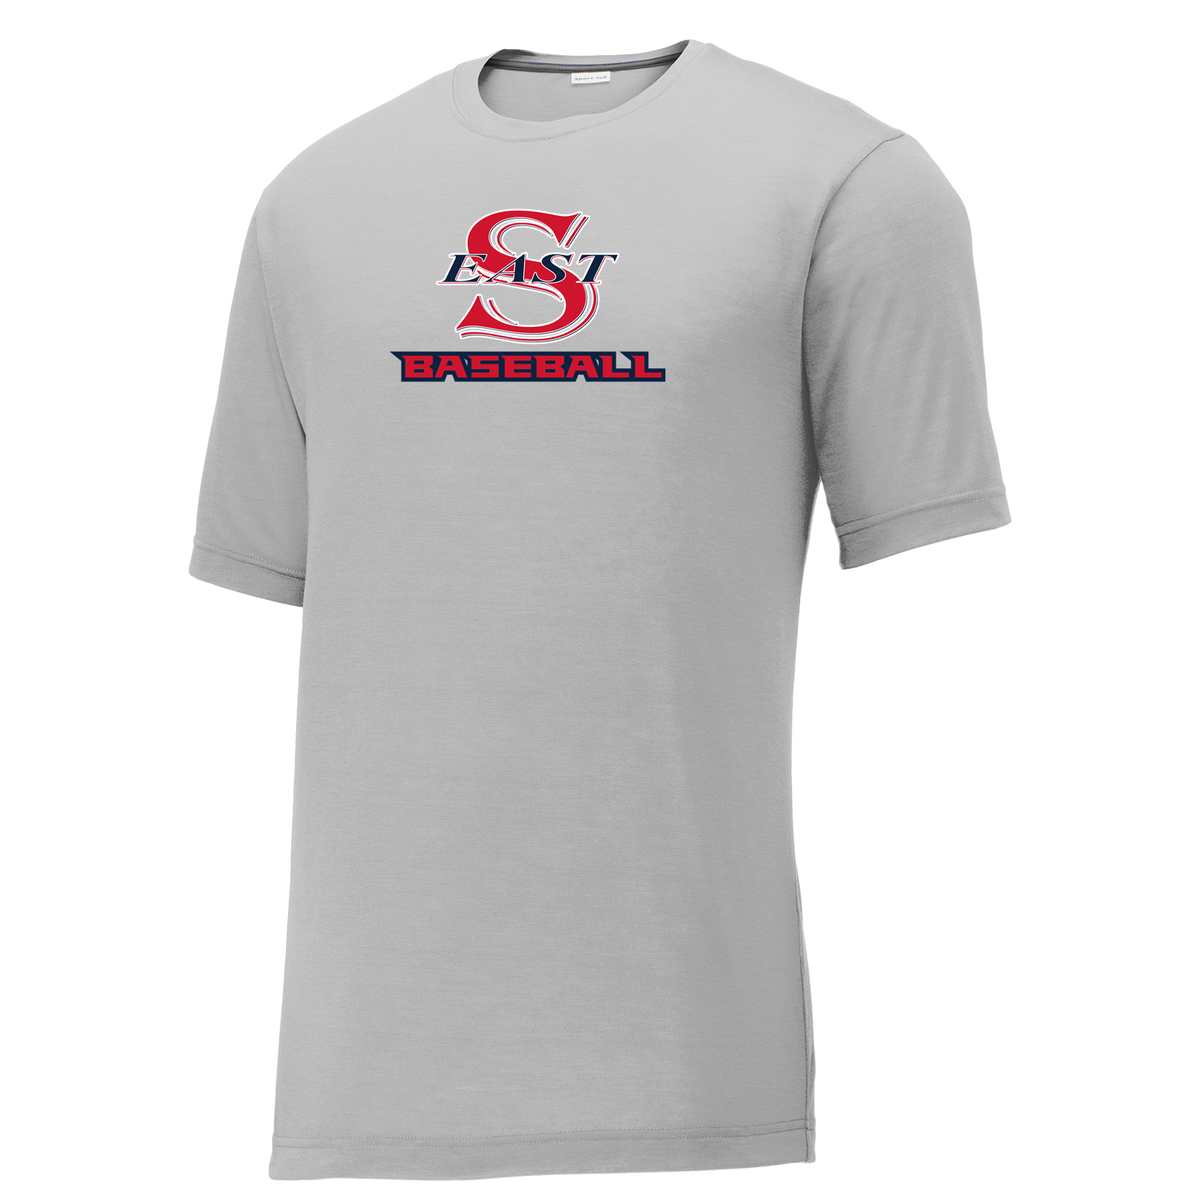 Smithtown East Baseball CottonTouch Performance T-Shirt